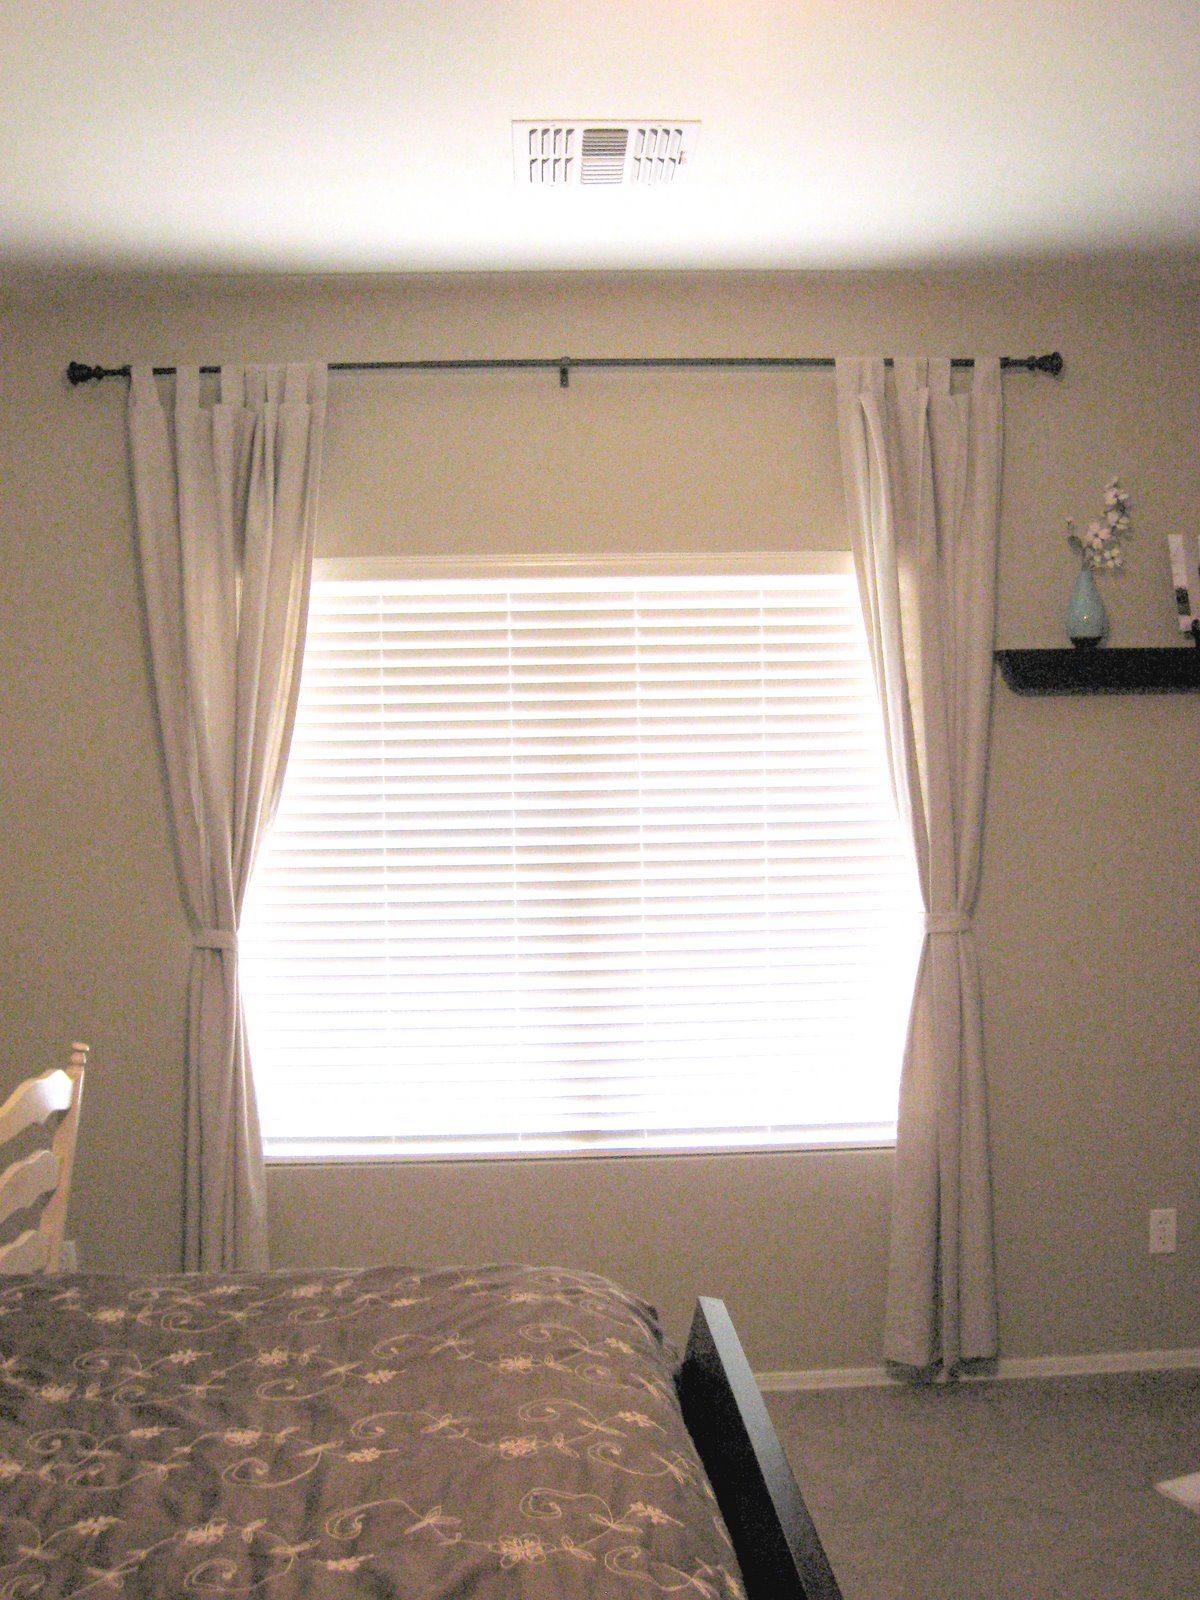 [New+Bedroom+Curtains.jpg]